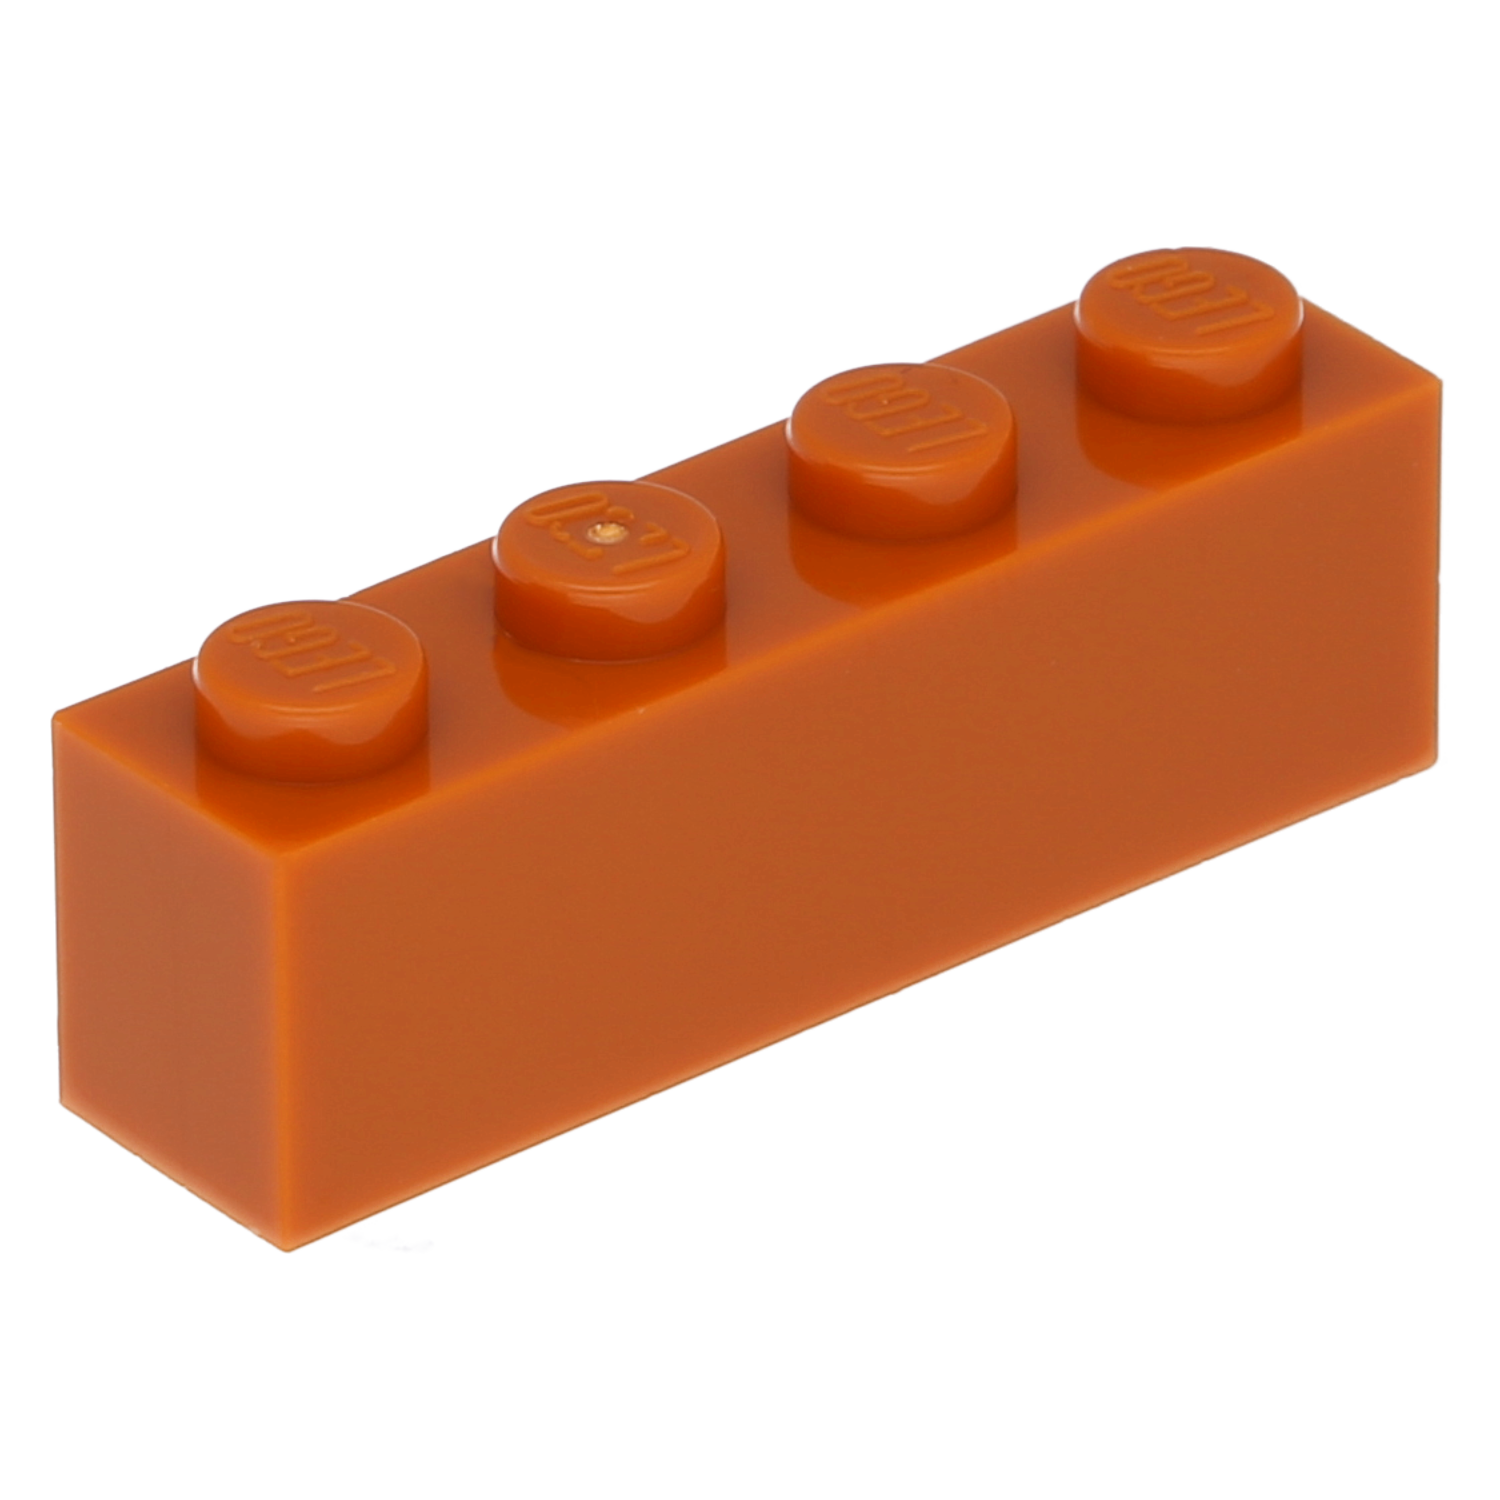 LEGO stones (standard) - 1 x 4